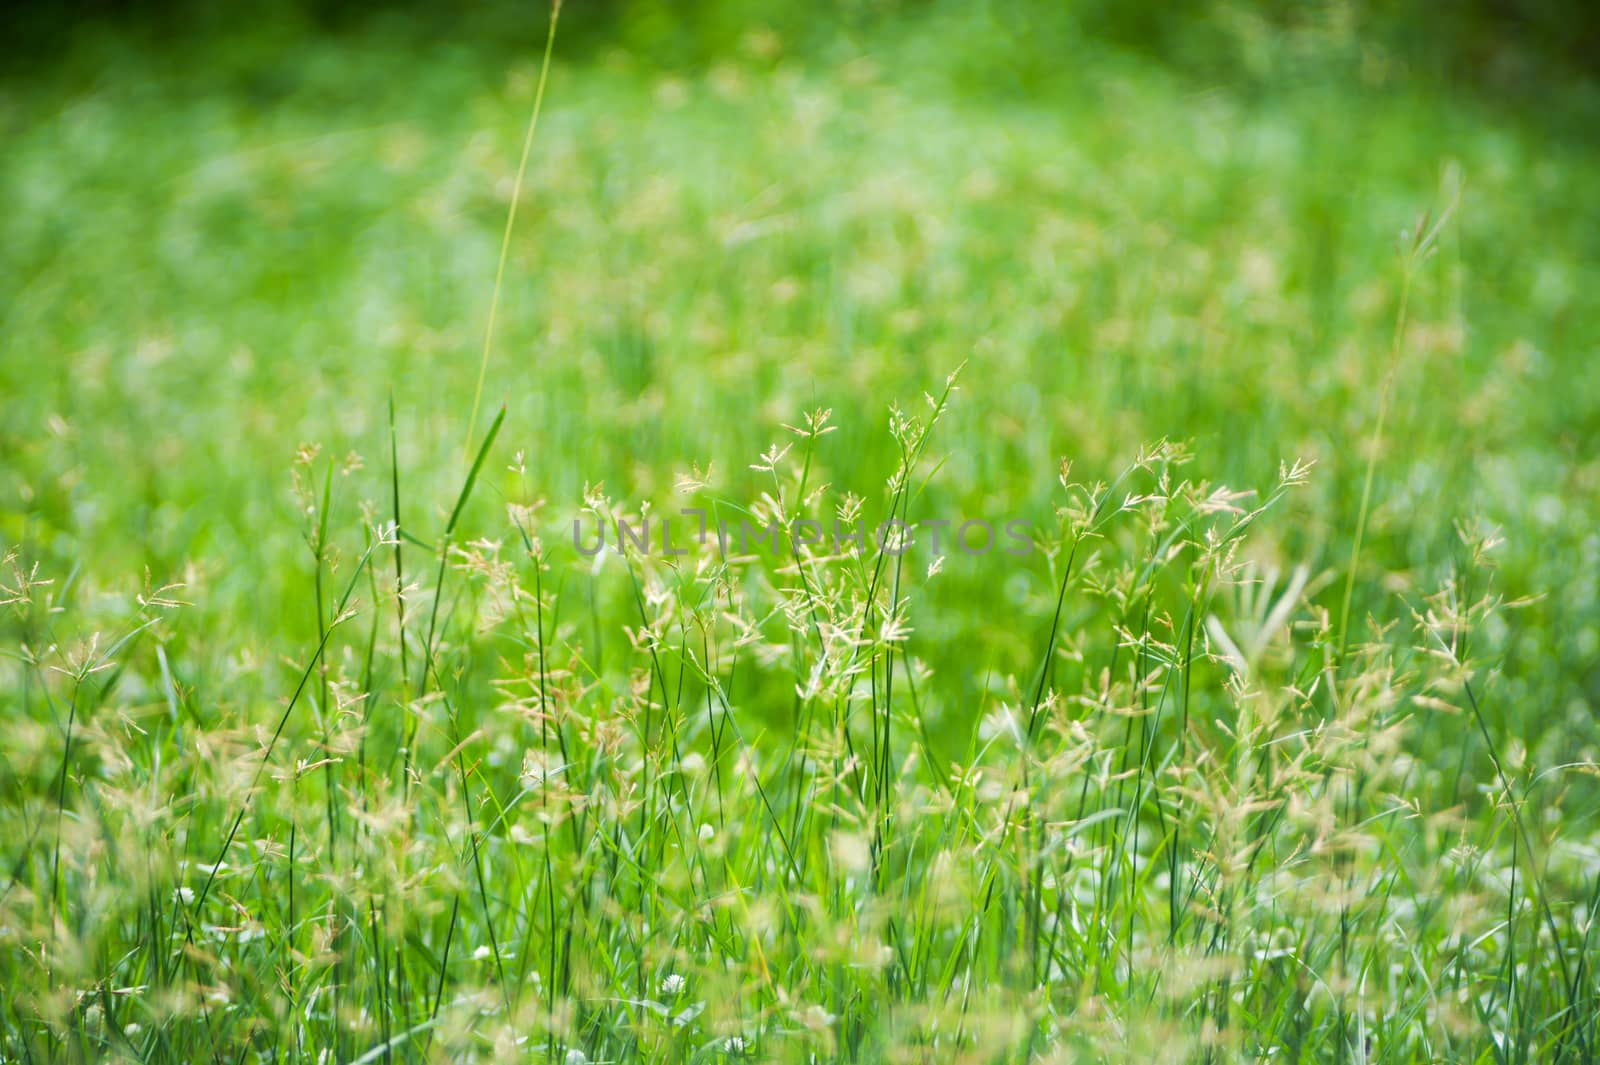 Green grass with sun light . by panumazz@gmail.com